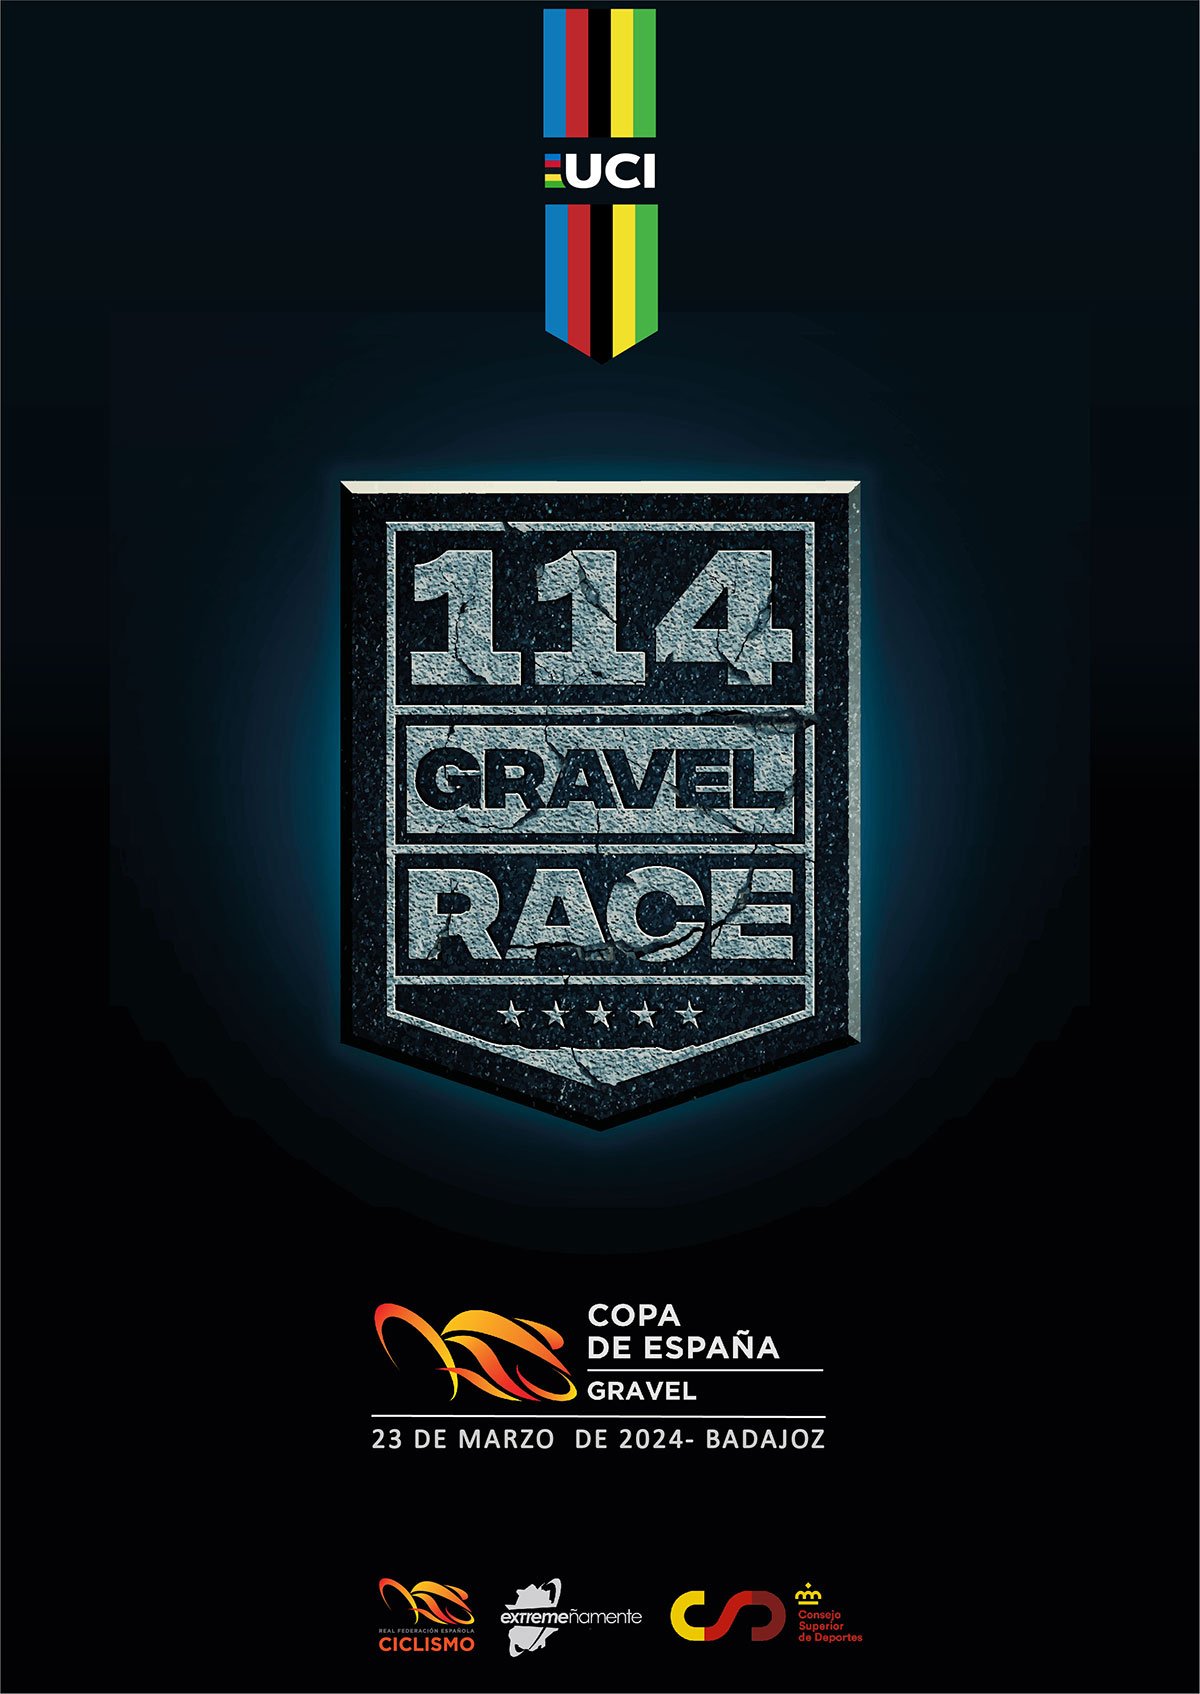 La segunda carrera de la Copa de España de Gravel llega este fin de semana con la disputa de la 114 Gravel Race en Badajoz